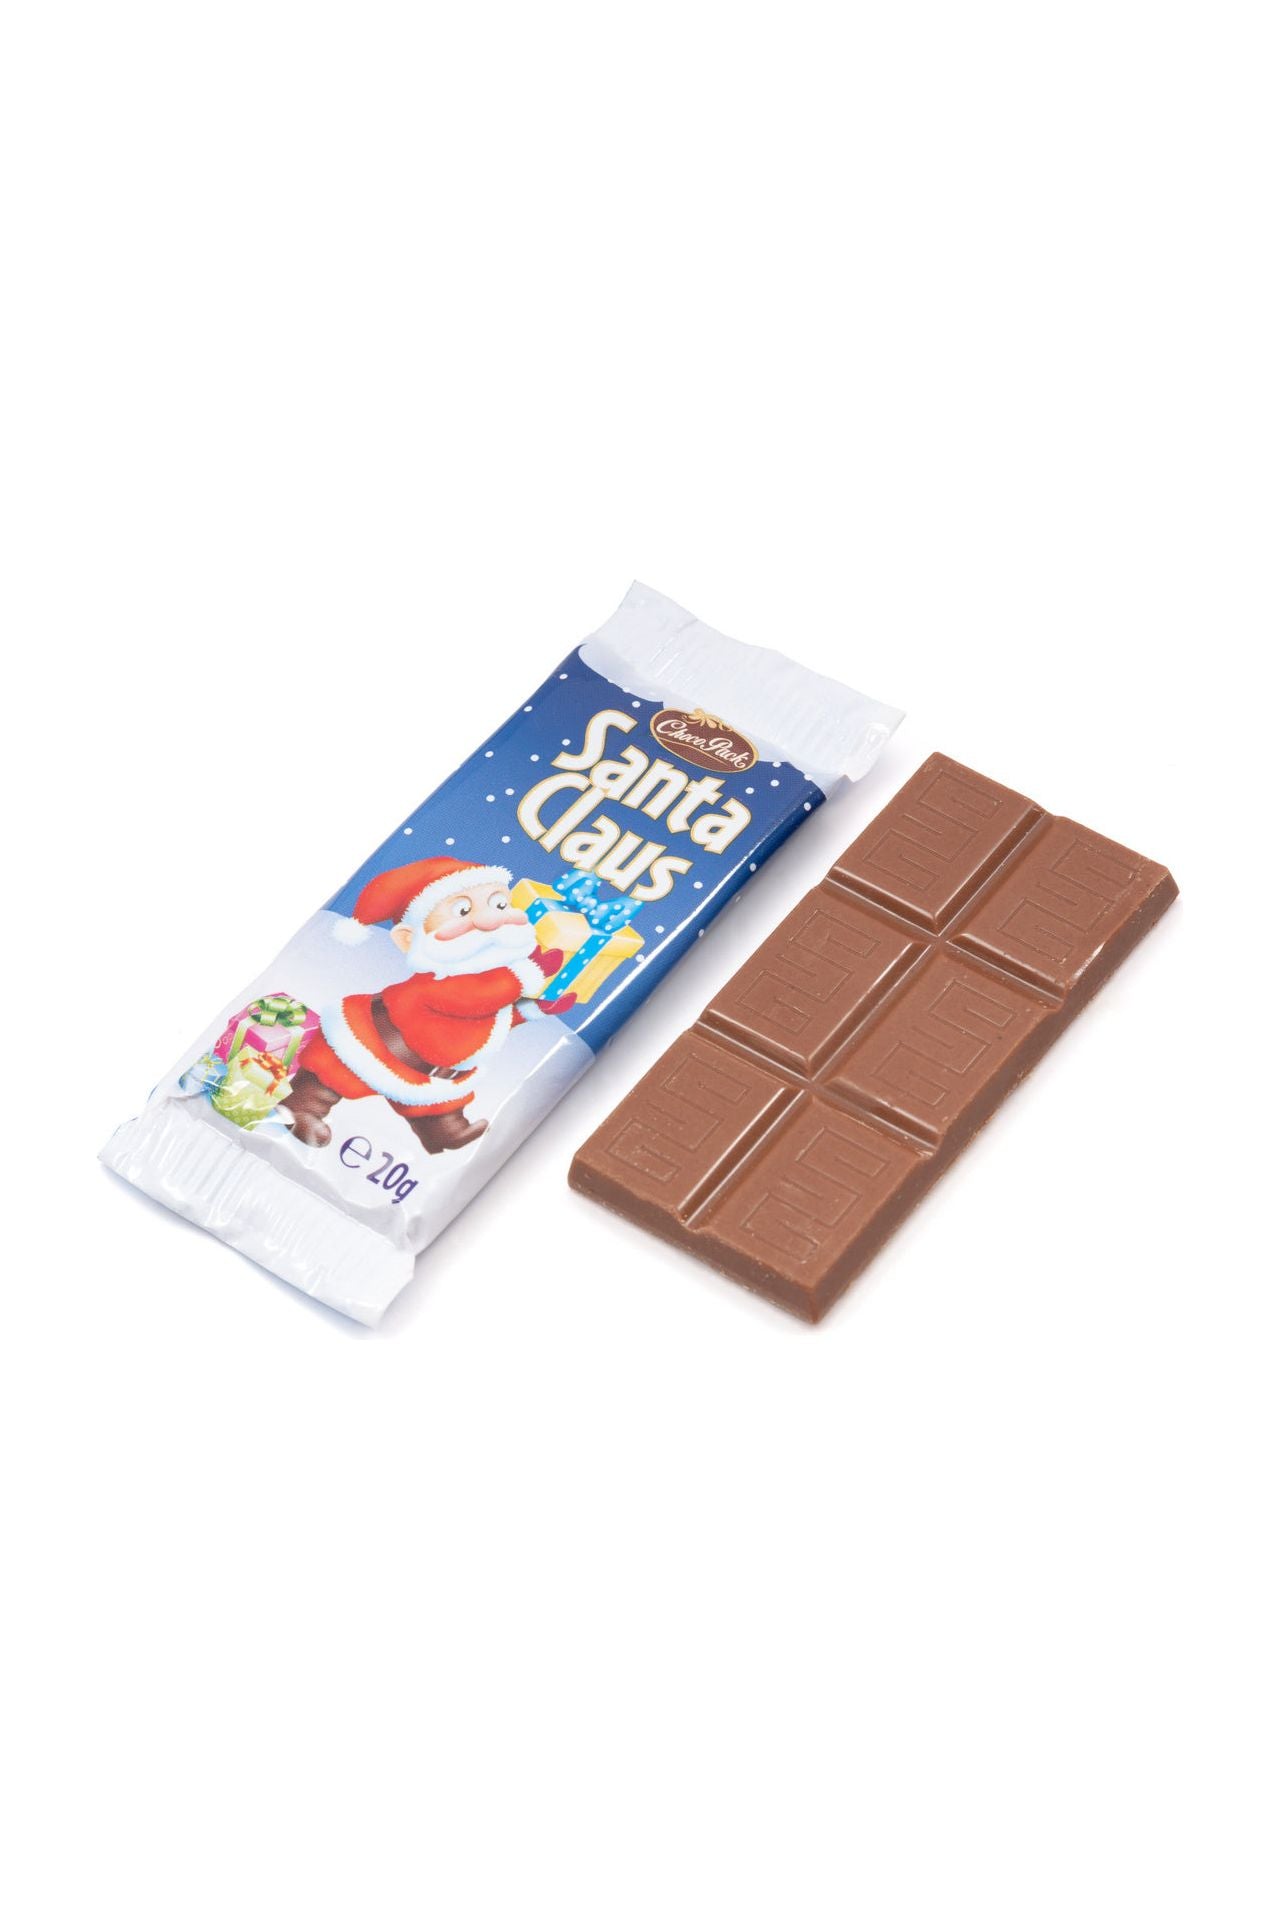 ChocoPack Chocolate Bar - Santa Claus